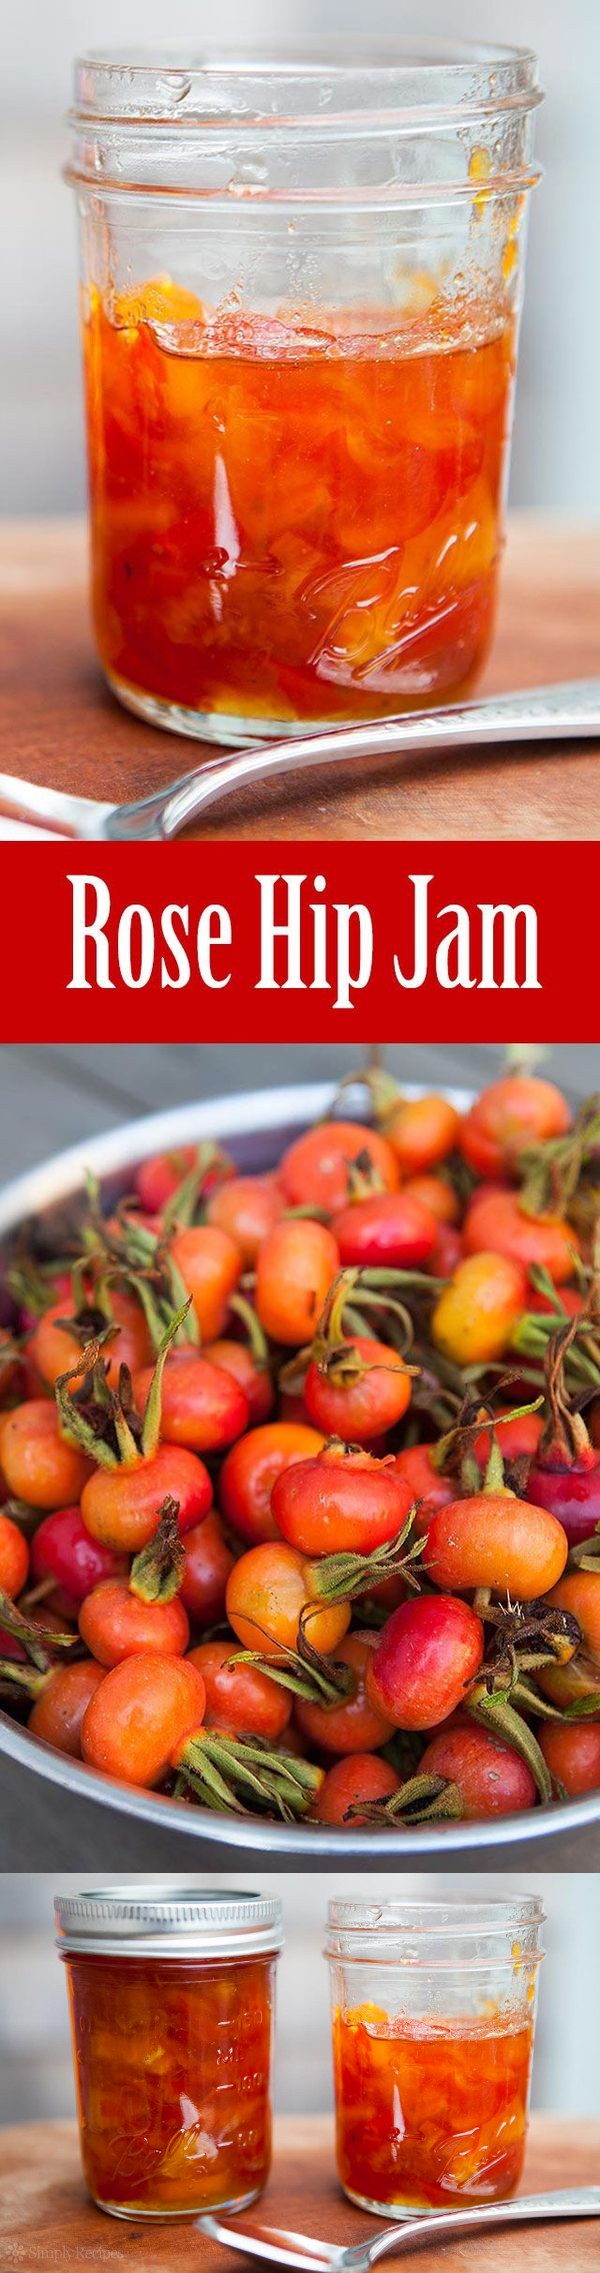 Rose Hip Jam